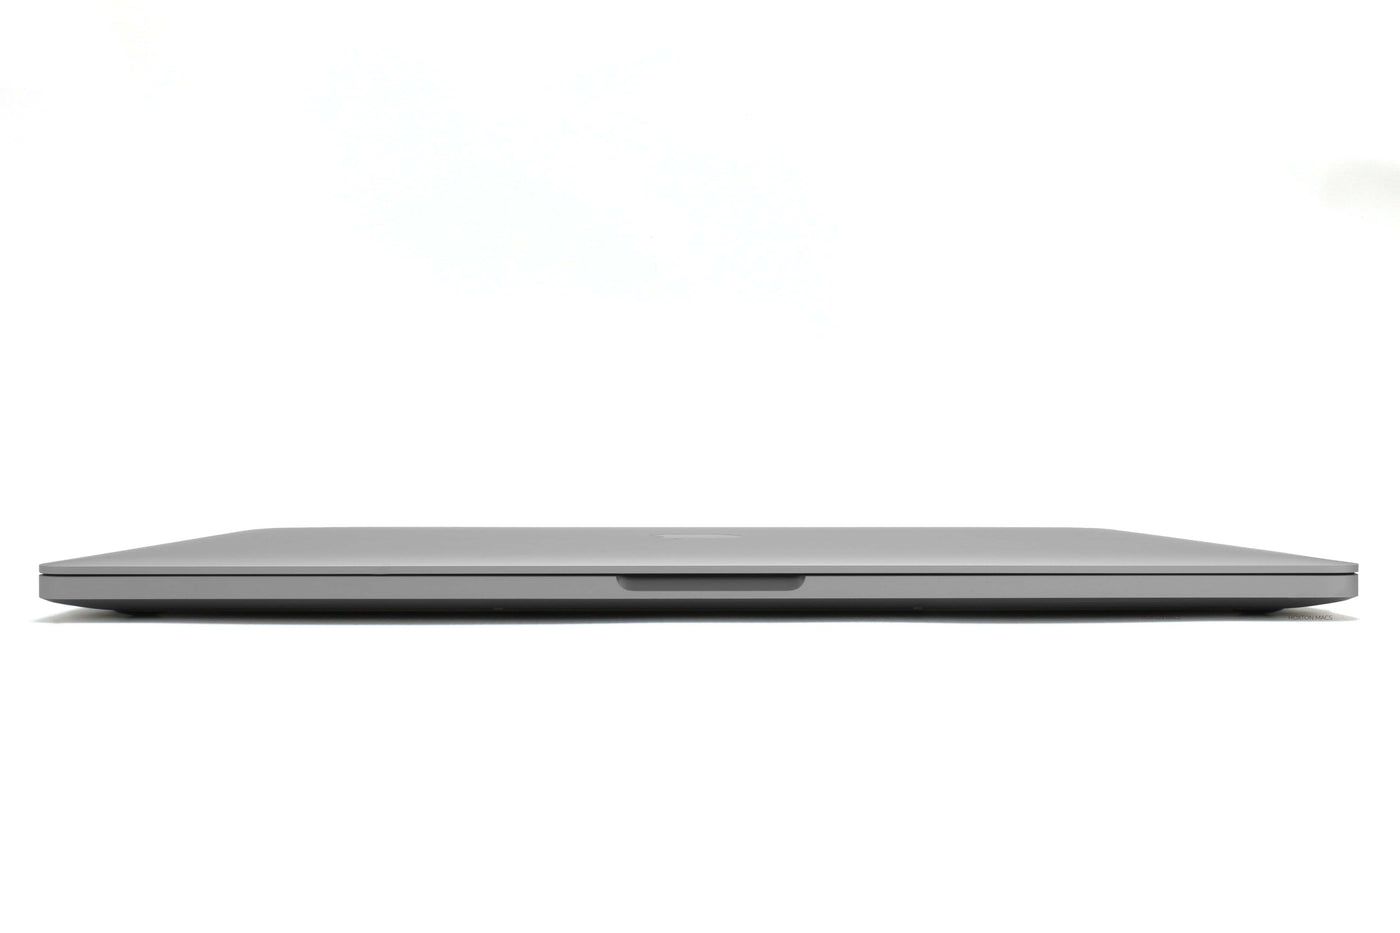 MacBook Pro 16-inch  A2141 Closed Space Grey